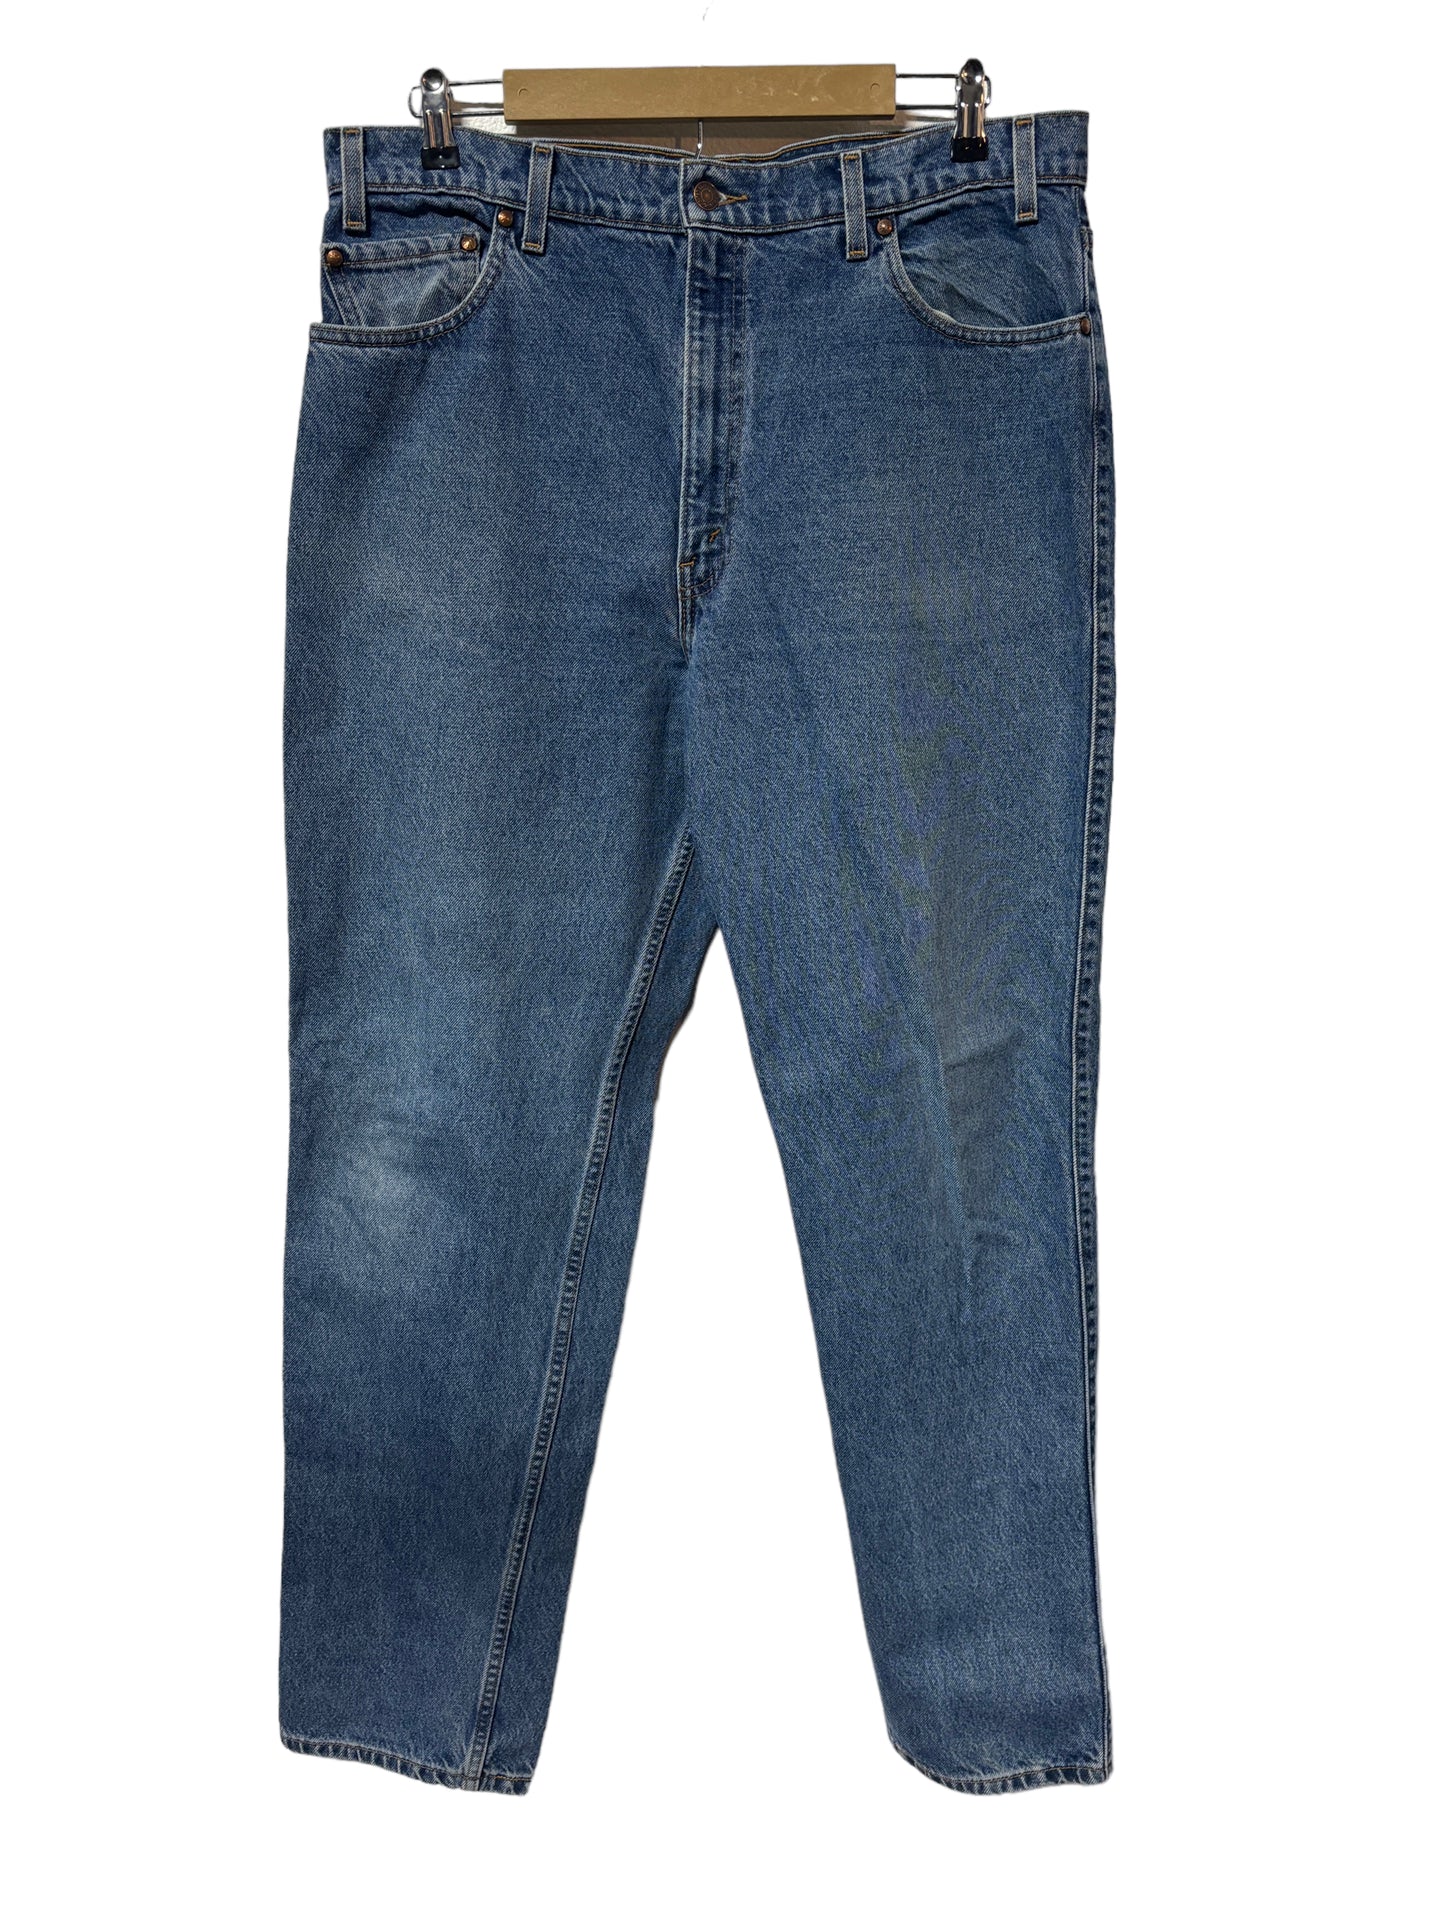 Vintage Levi Relaxed Fit 540 Orange Tab Medium Wash Denim Jeans Size 38x34